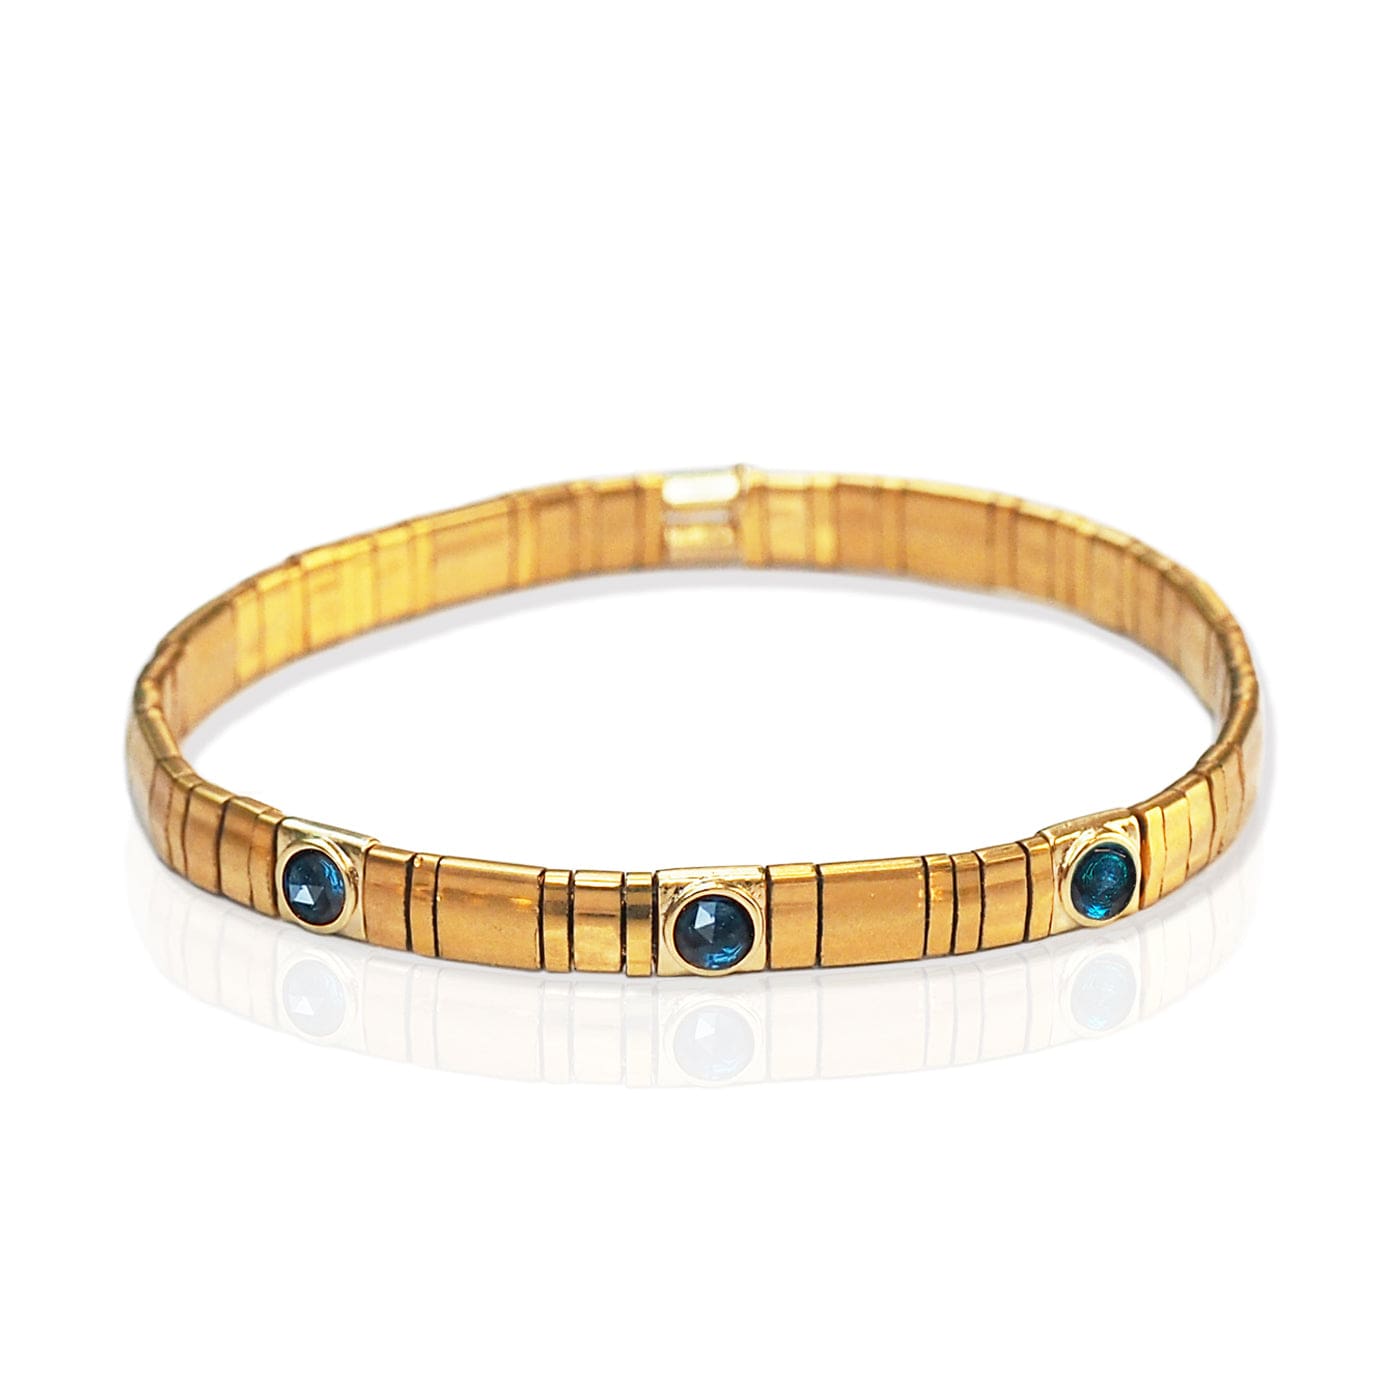 TAI JEWELRY Bracelet -4 Handmade Gold Tila Bead Bracelet With Scattered Stone